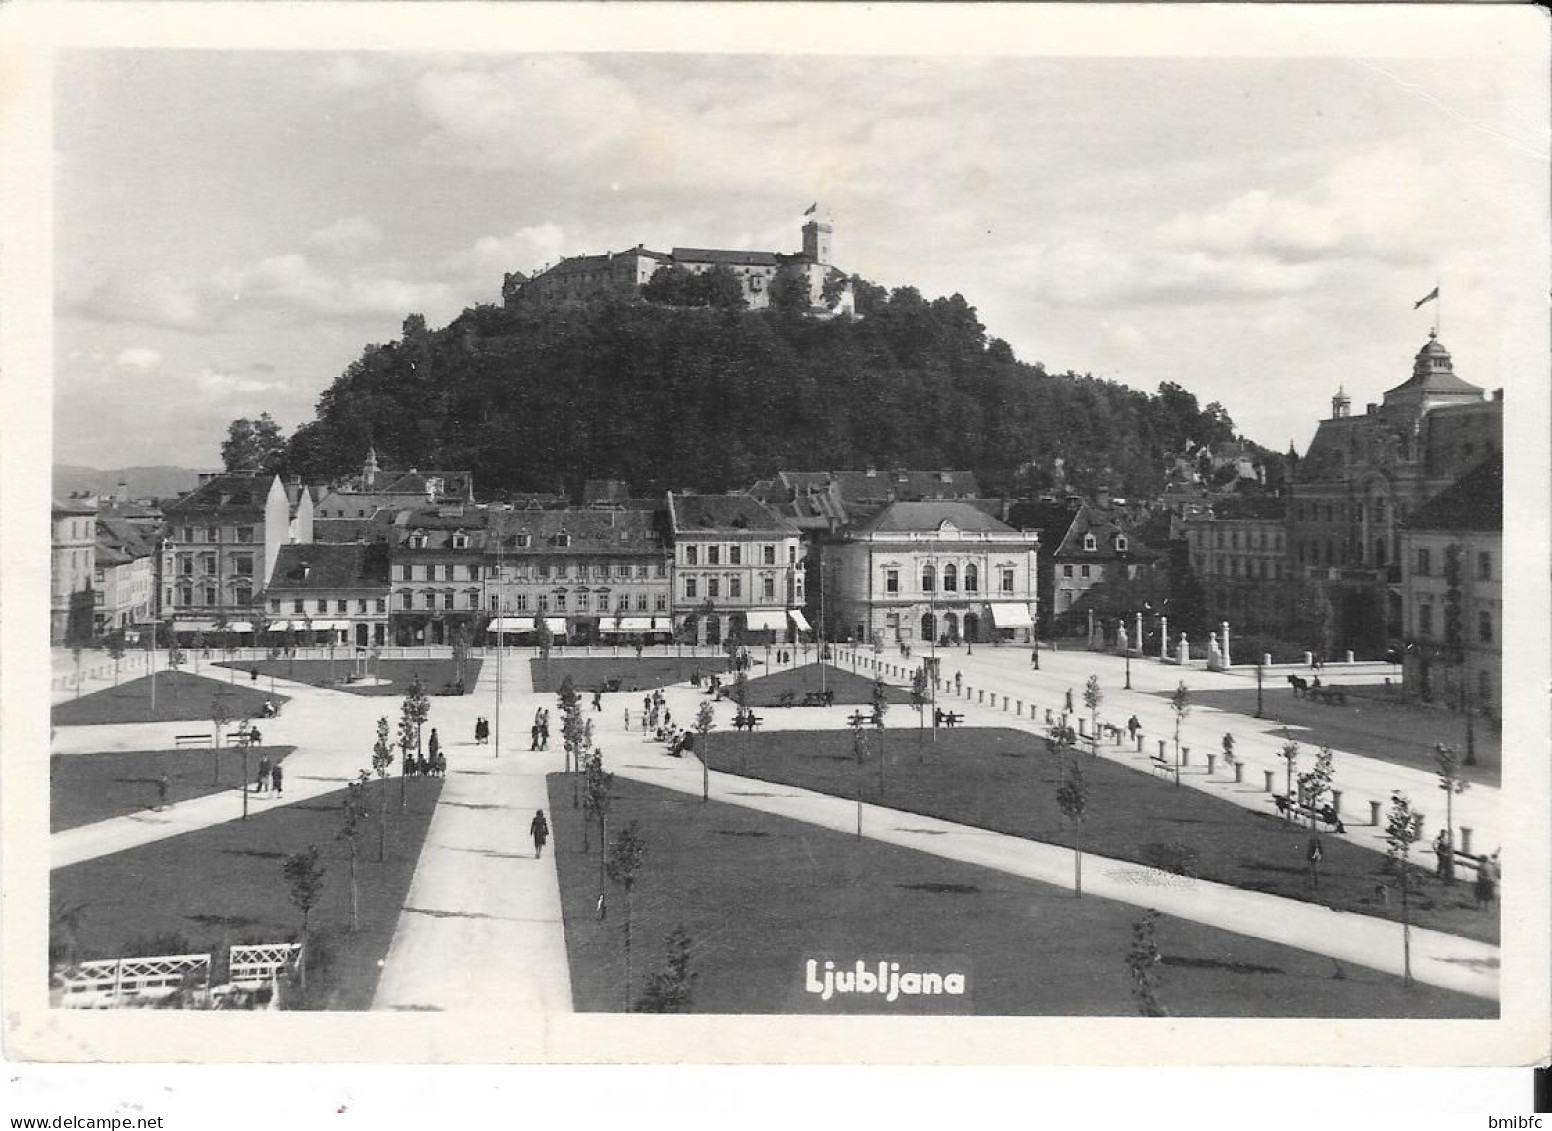 Ljubljana - Slowenien